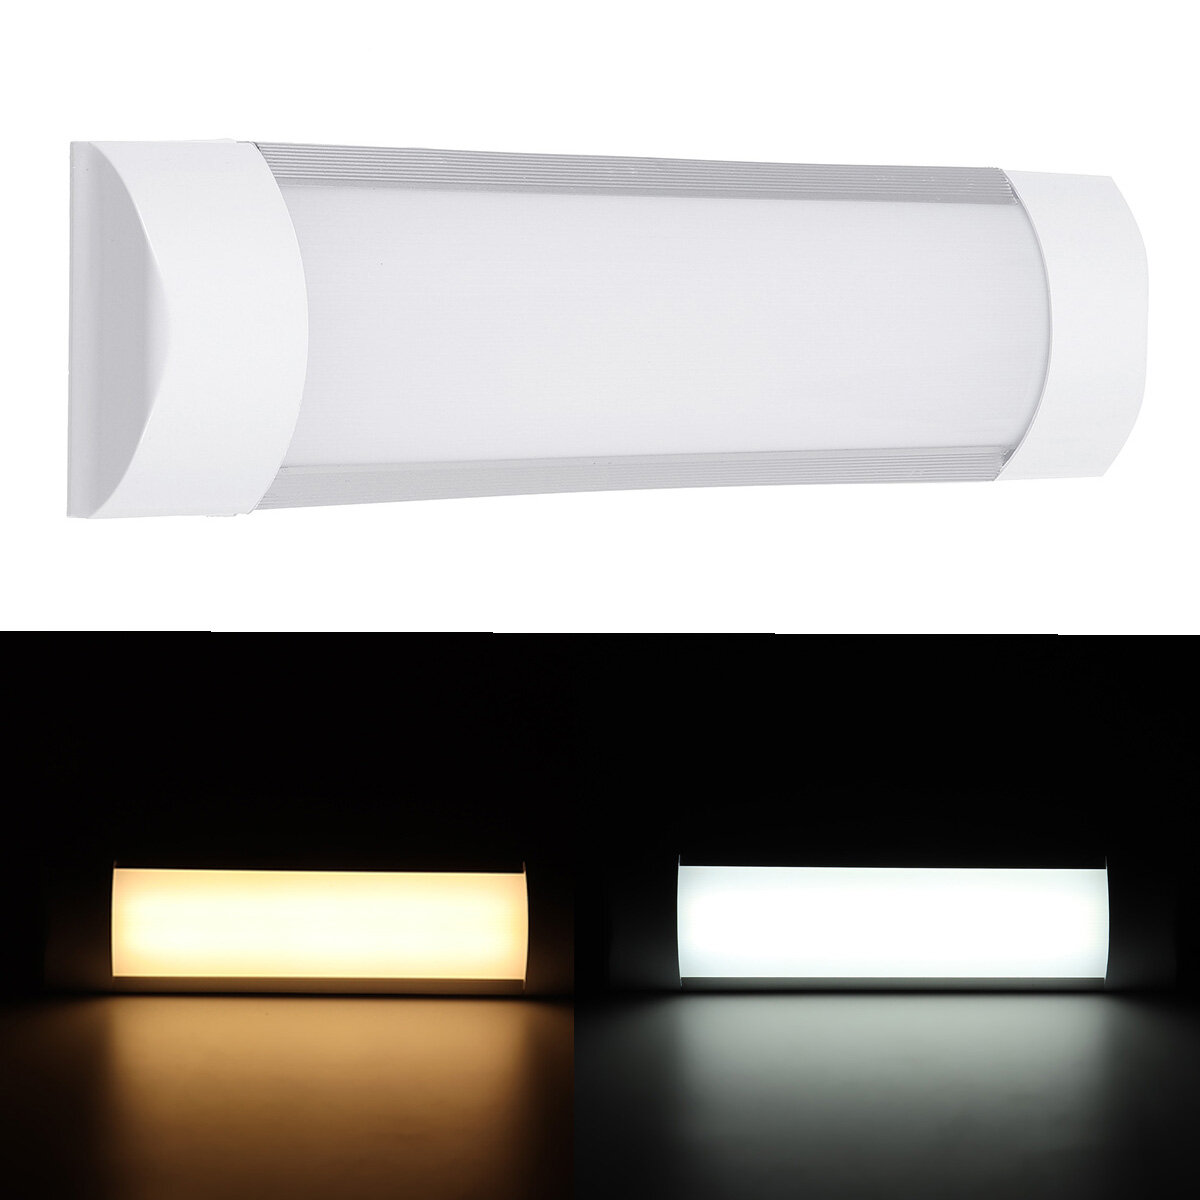 

AC85-265V 30CM T10 LED Tube Light SMD2835 Double Rows Integration Home Decorative Lamp